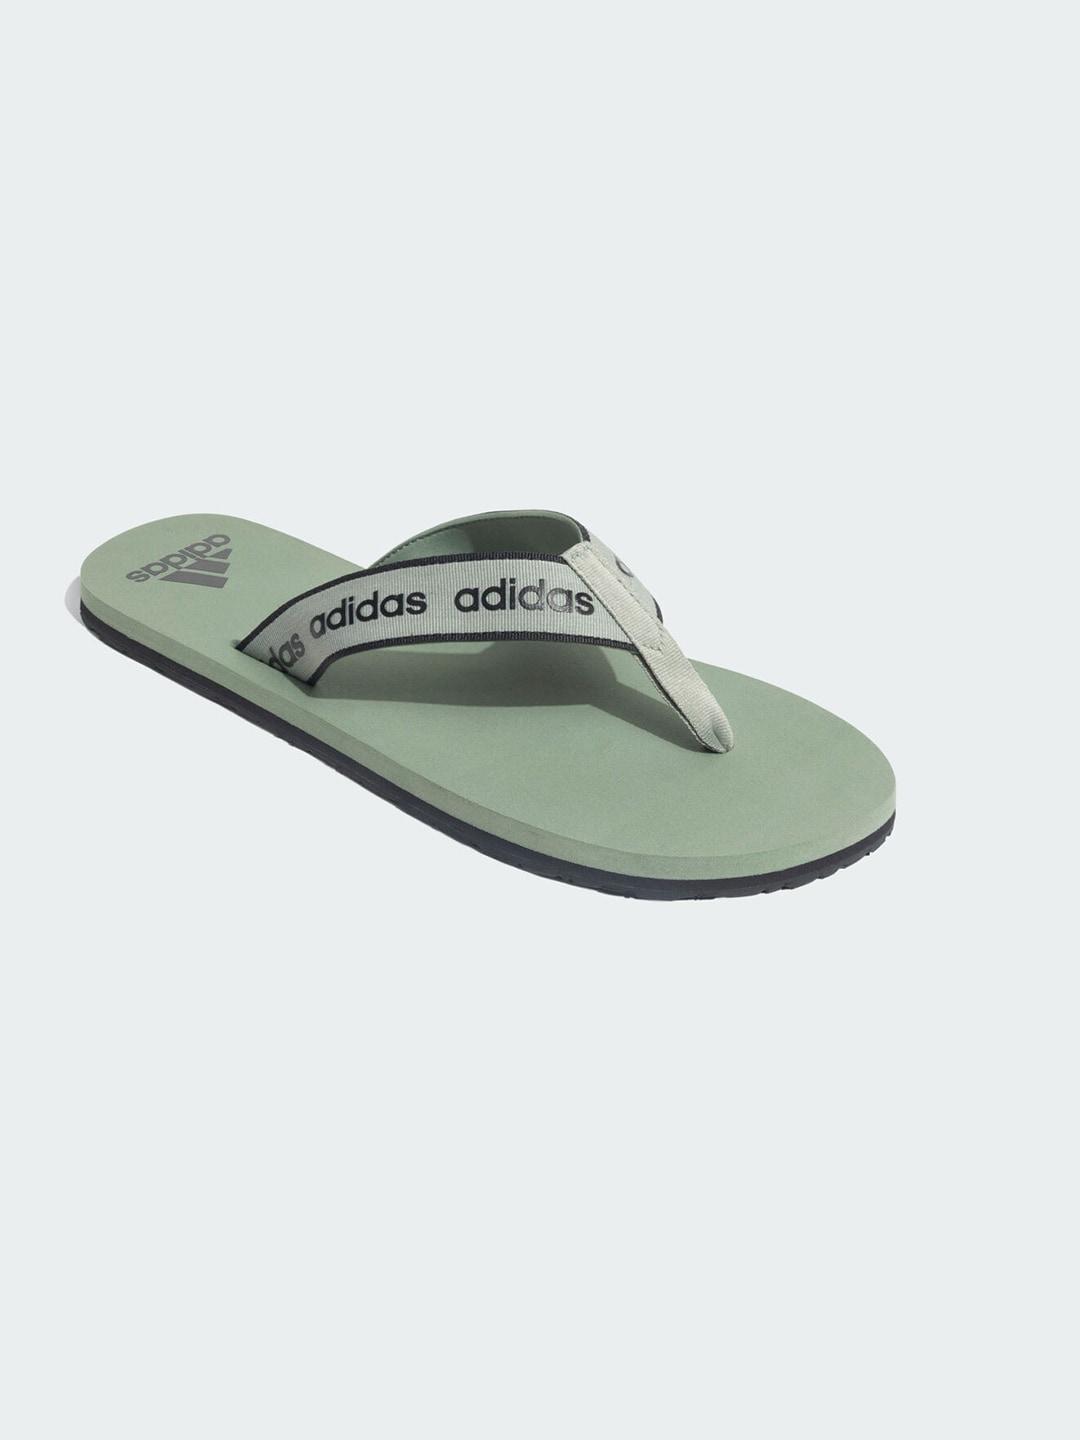 adidas-men-snozo-beach-m-thong-flip-flops